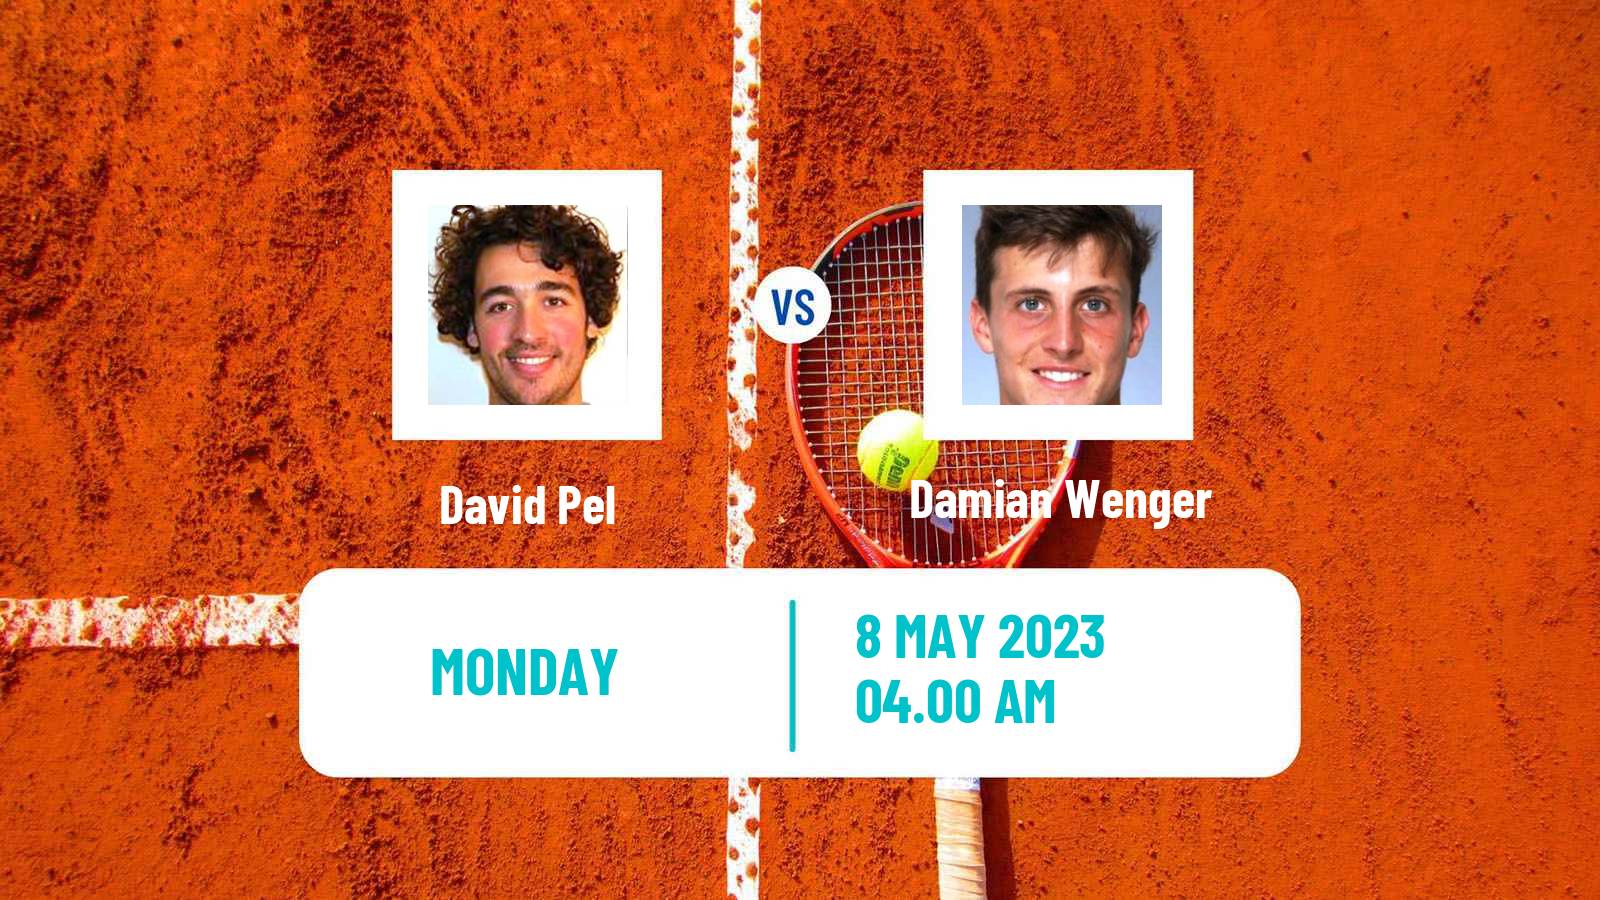 Tennis ATP Challenger David Pel - Damian Wenger